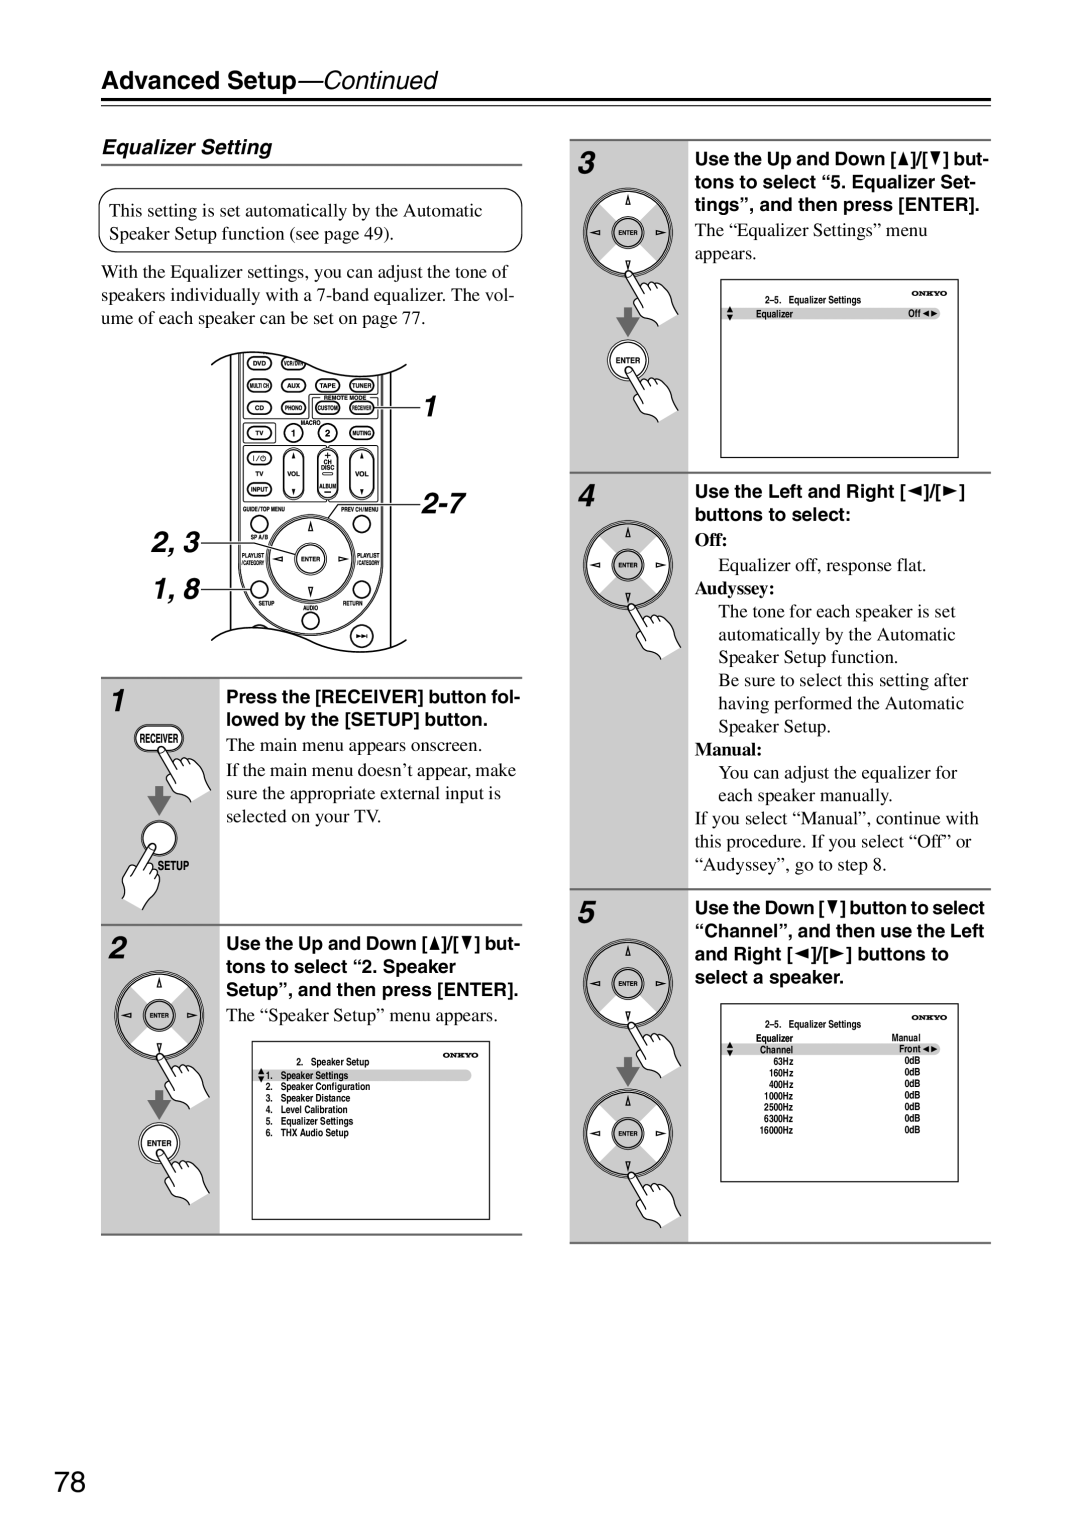 Onkyo TX-SA706 instruction manual 1 2-7 4 2, Equalizer Setting, Advanced Setup—Continued, Audyssey, Manual 